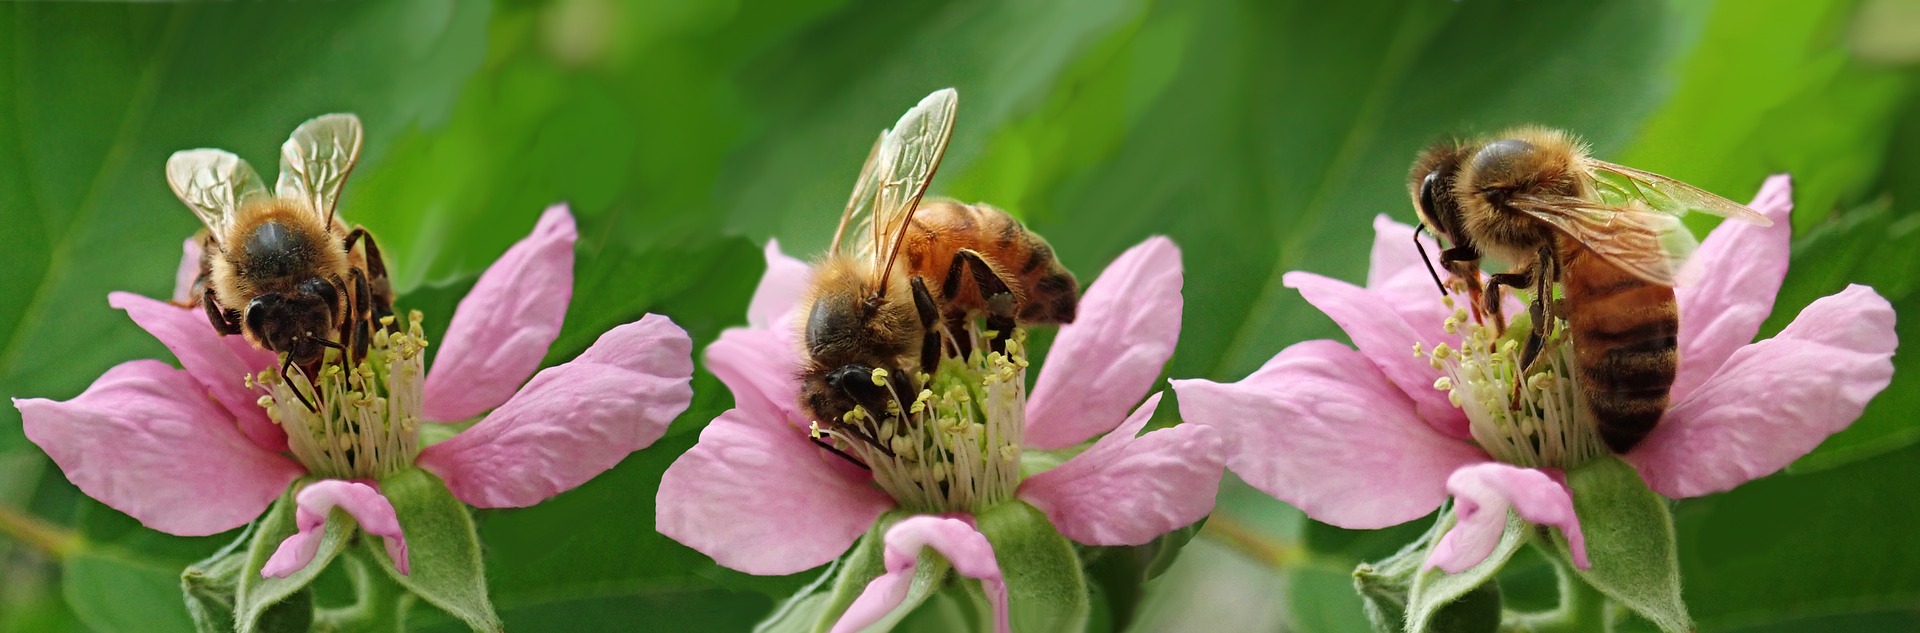 miel-belge.be - Image par Beverly Buckley de Pixabay